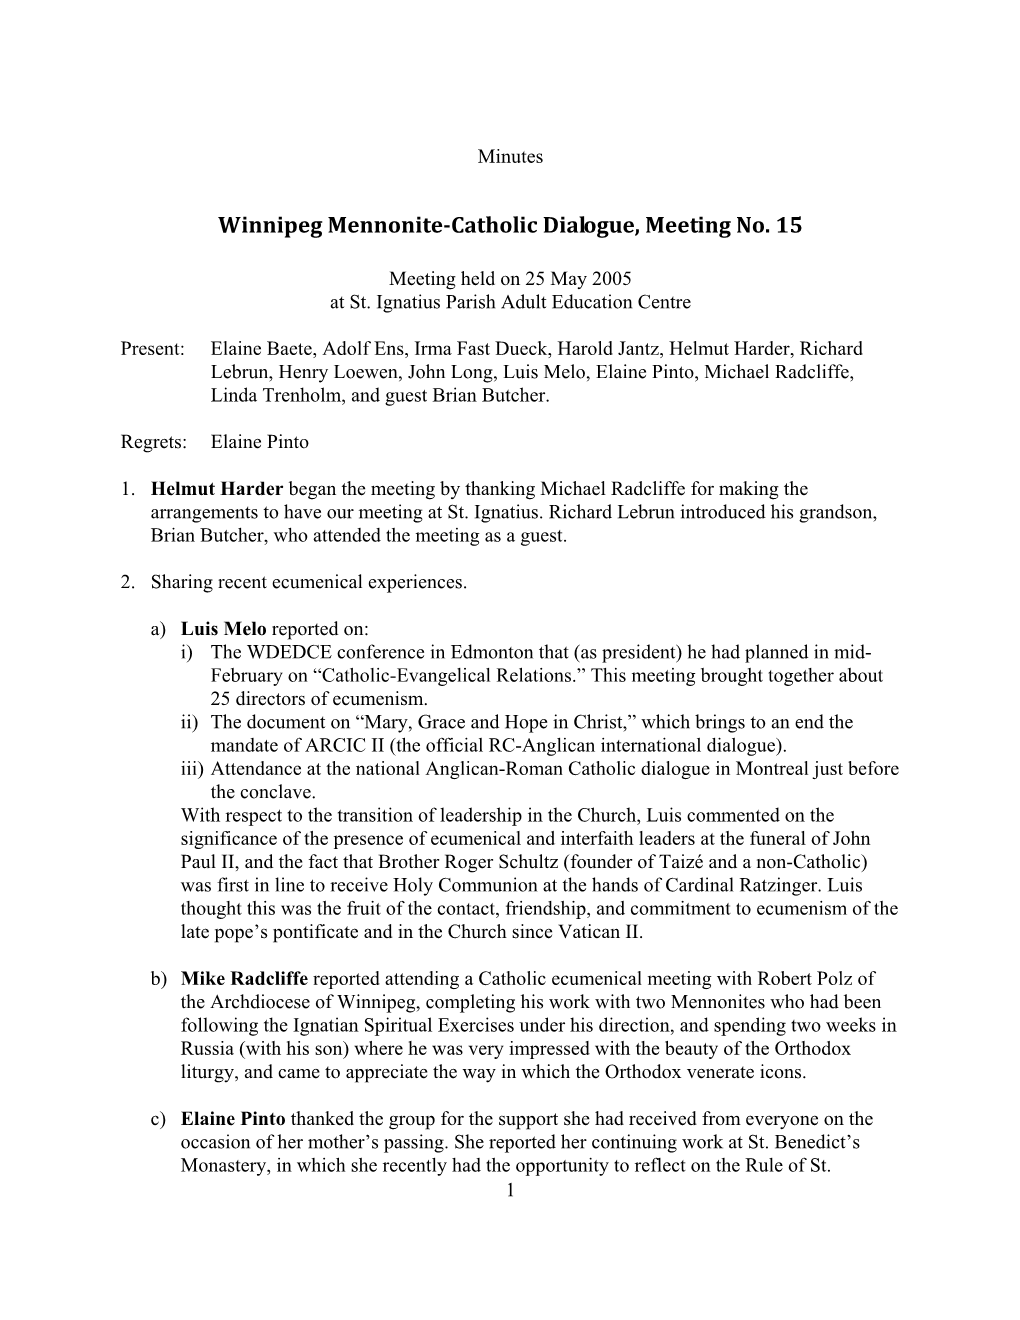 Winnipeg Regional Mennonite‐Catholic Dialogue, Meeting No. 15